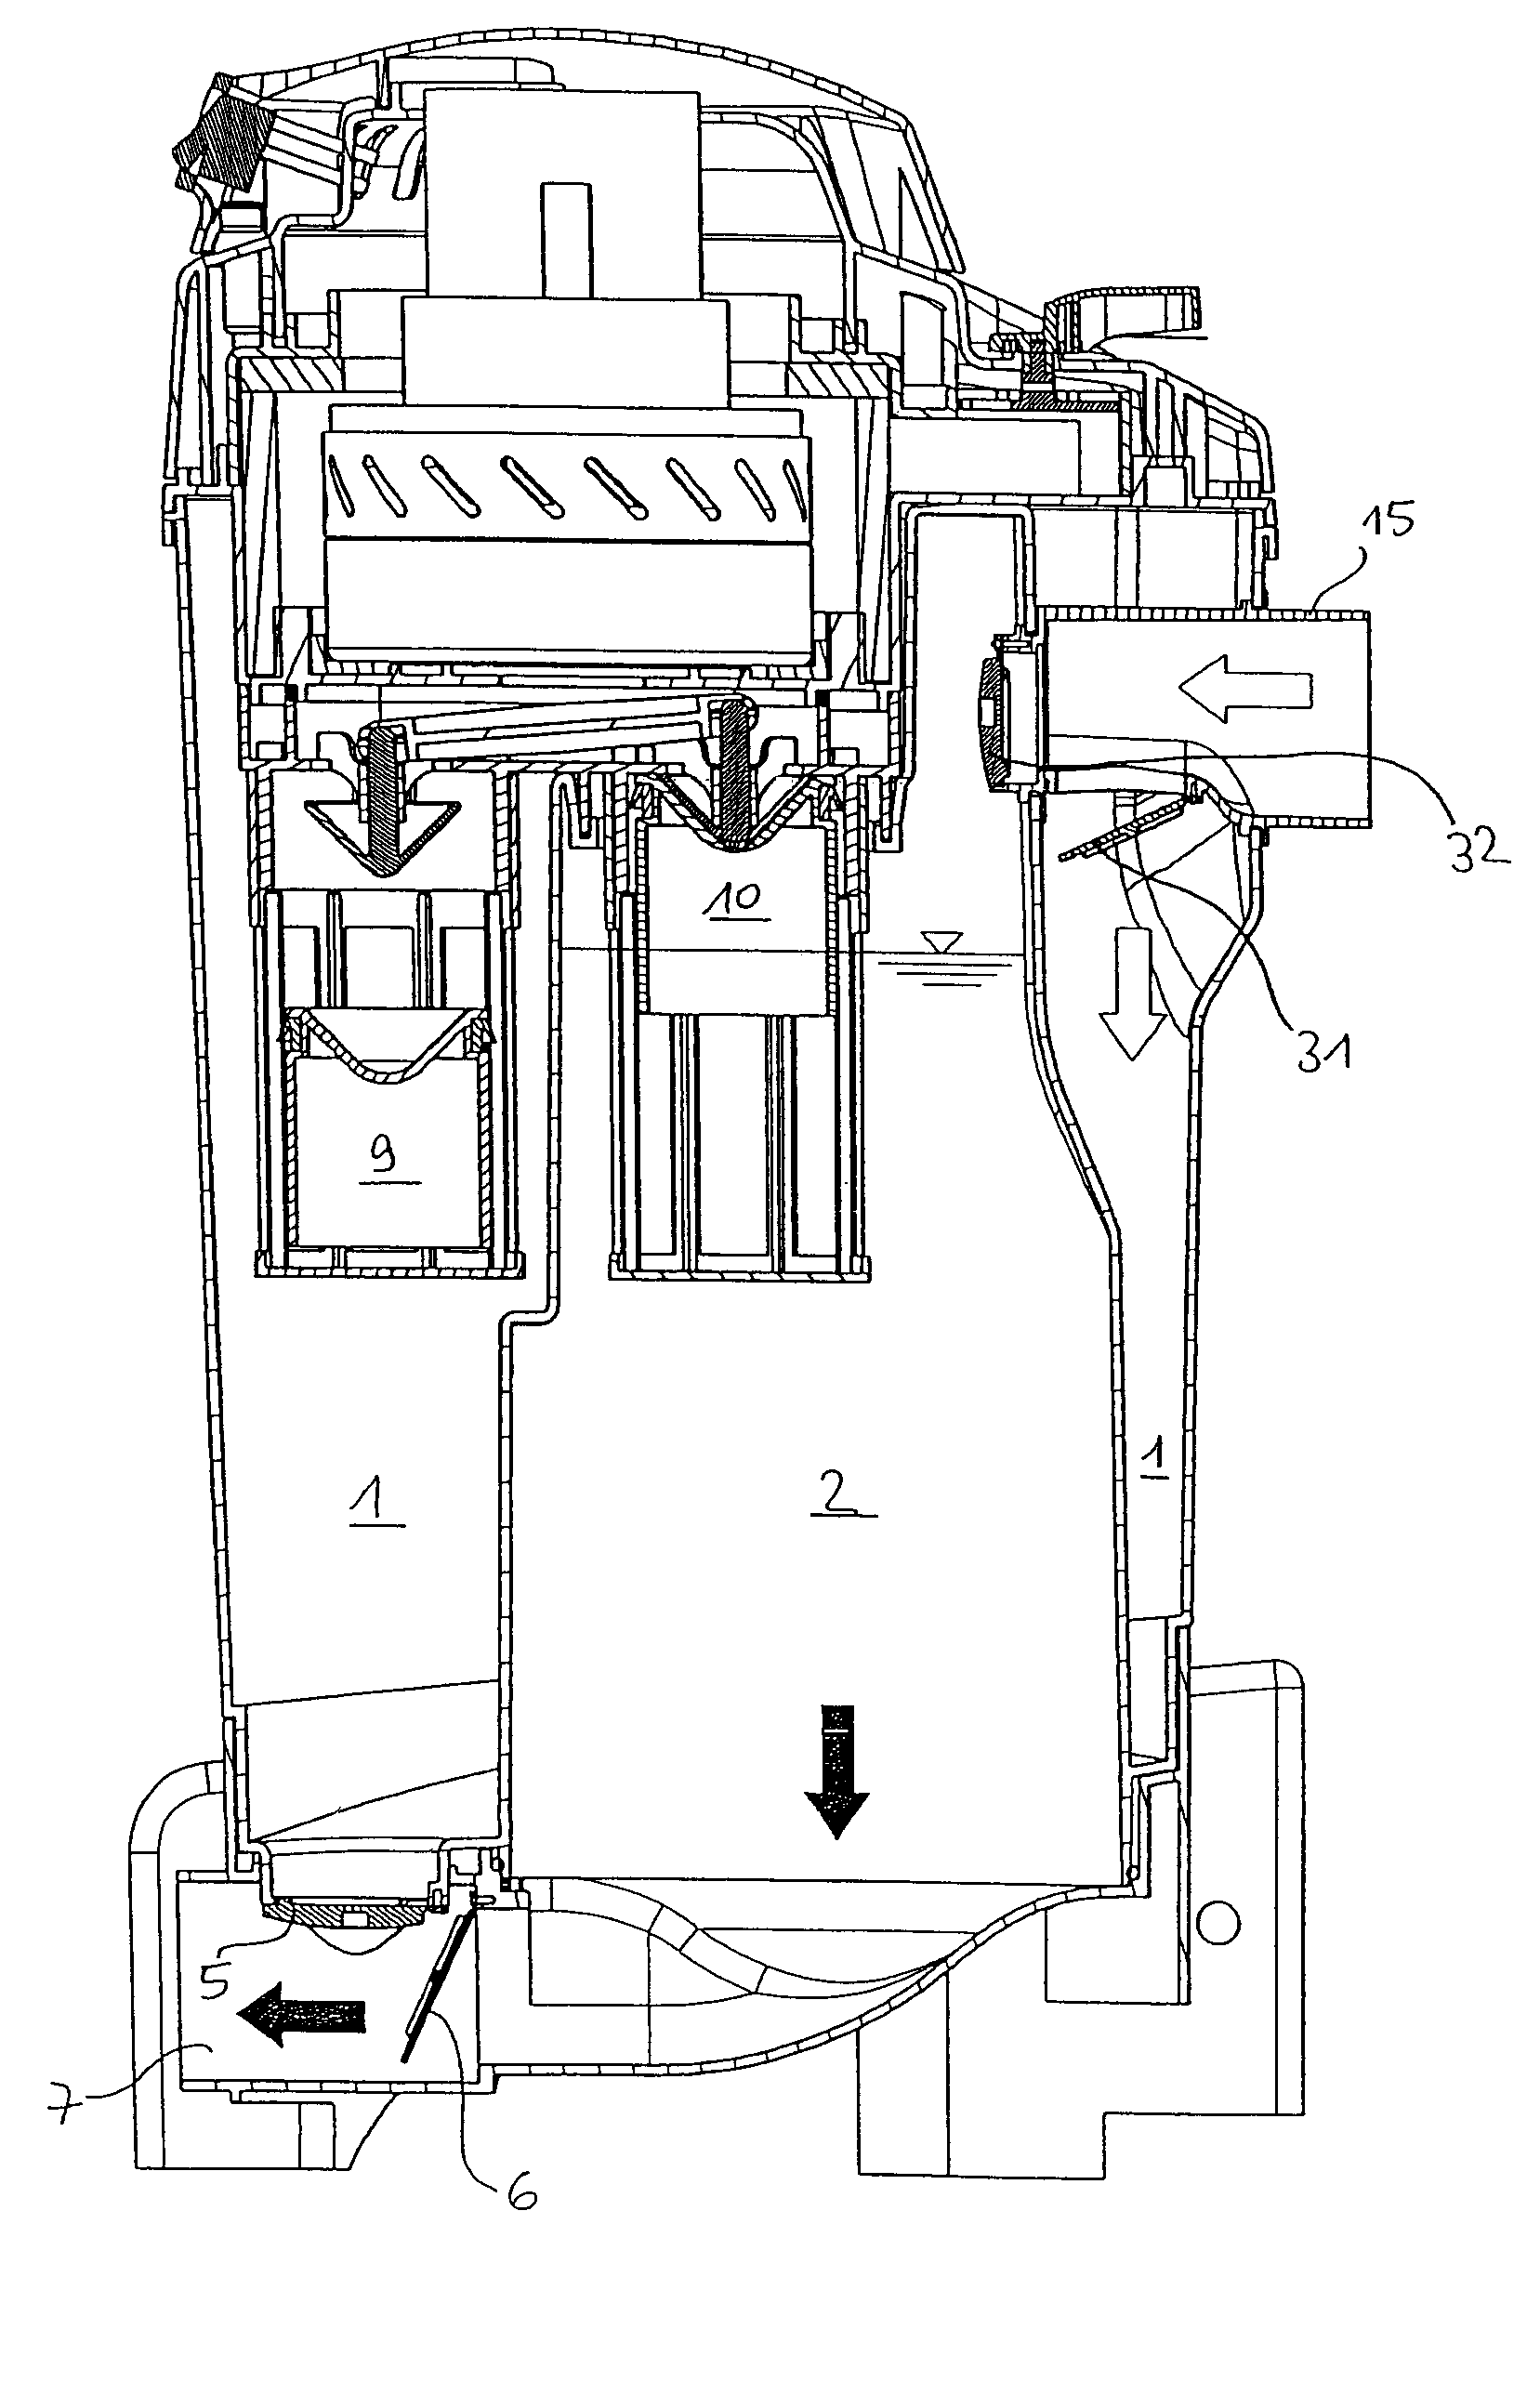 Liquid aspirator